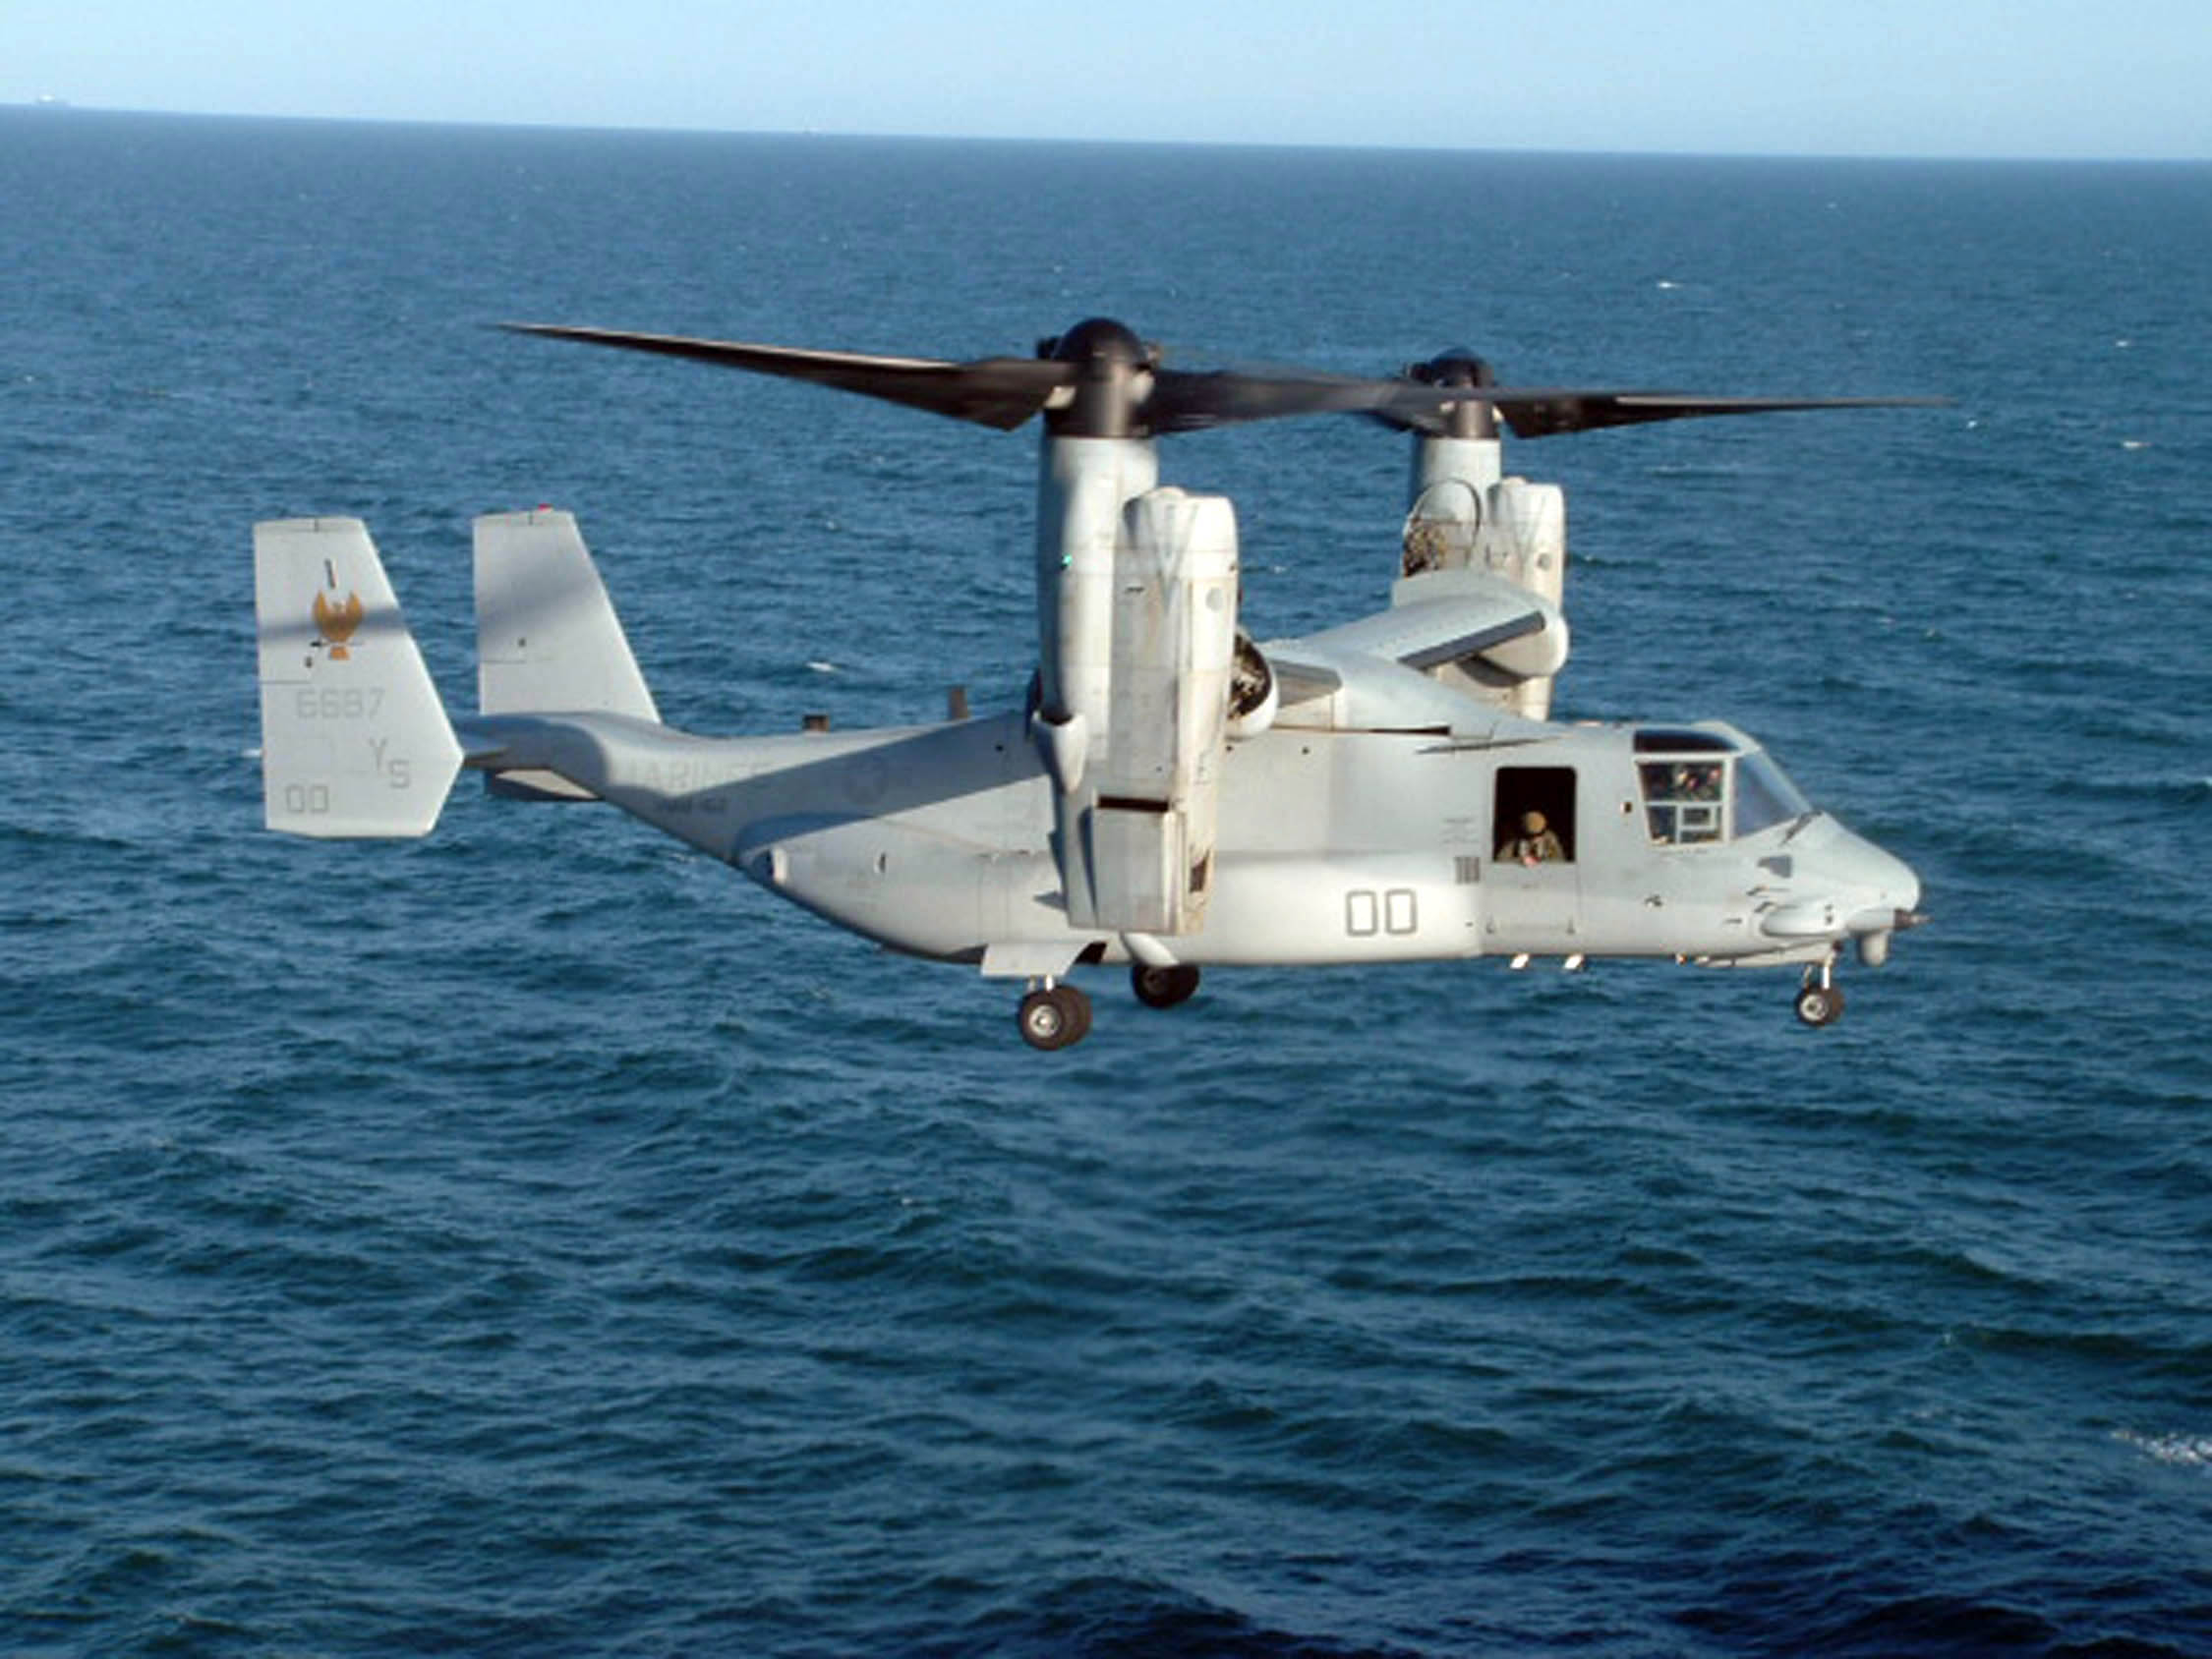 http://upload.wikimedia.org/wikipedia/commons/f/f5/US_Navy_080220-N-5180F-015_A_Marine_Corps_MV-22_Osprey_prepares_to_land_aboard_the_amphibious_assault_ship_USS_Nassau_(LHA_4).jpg